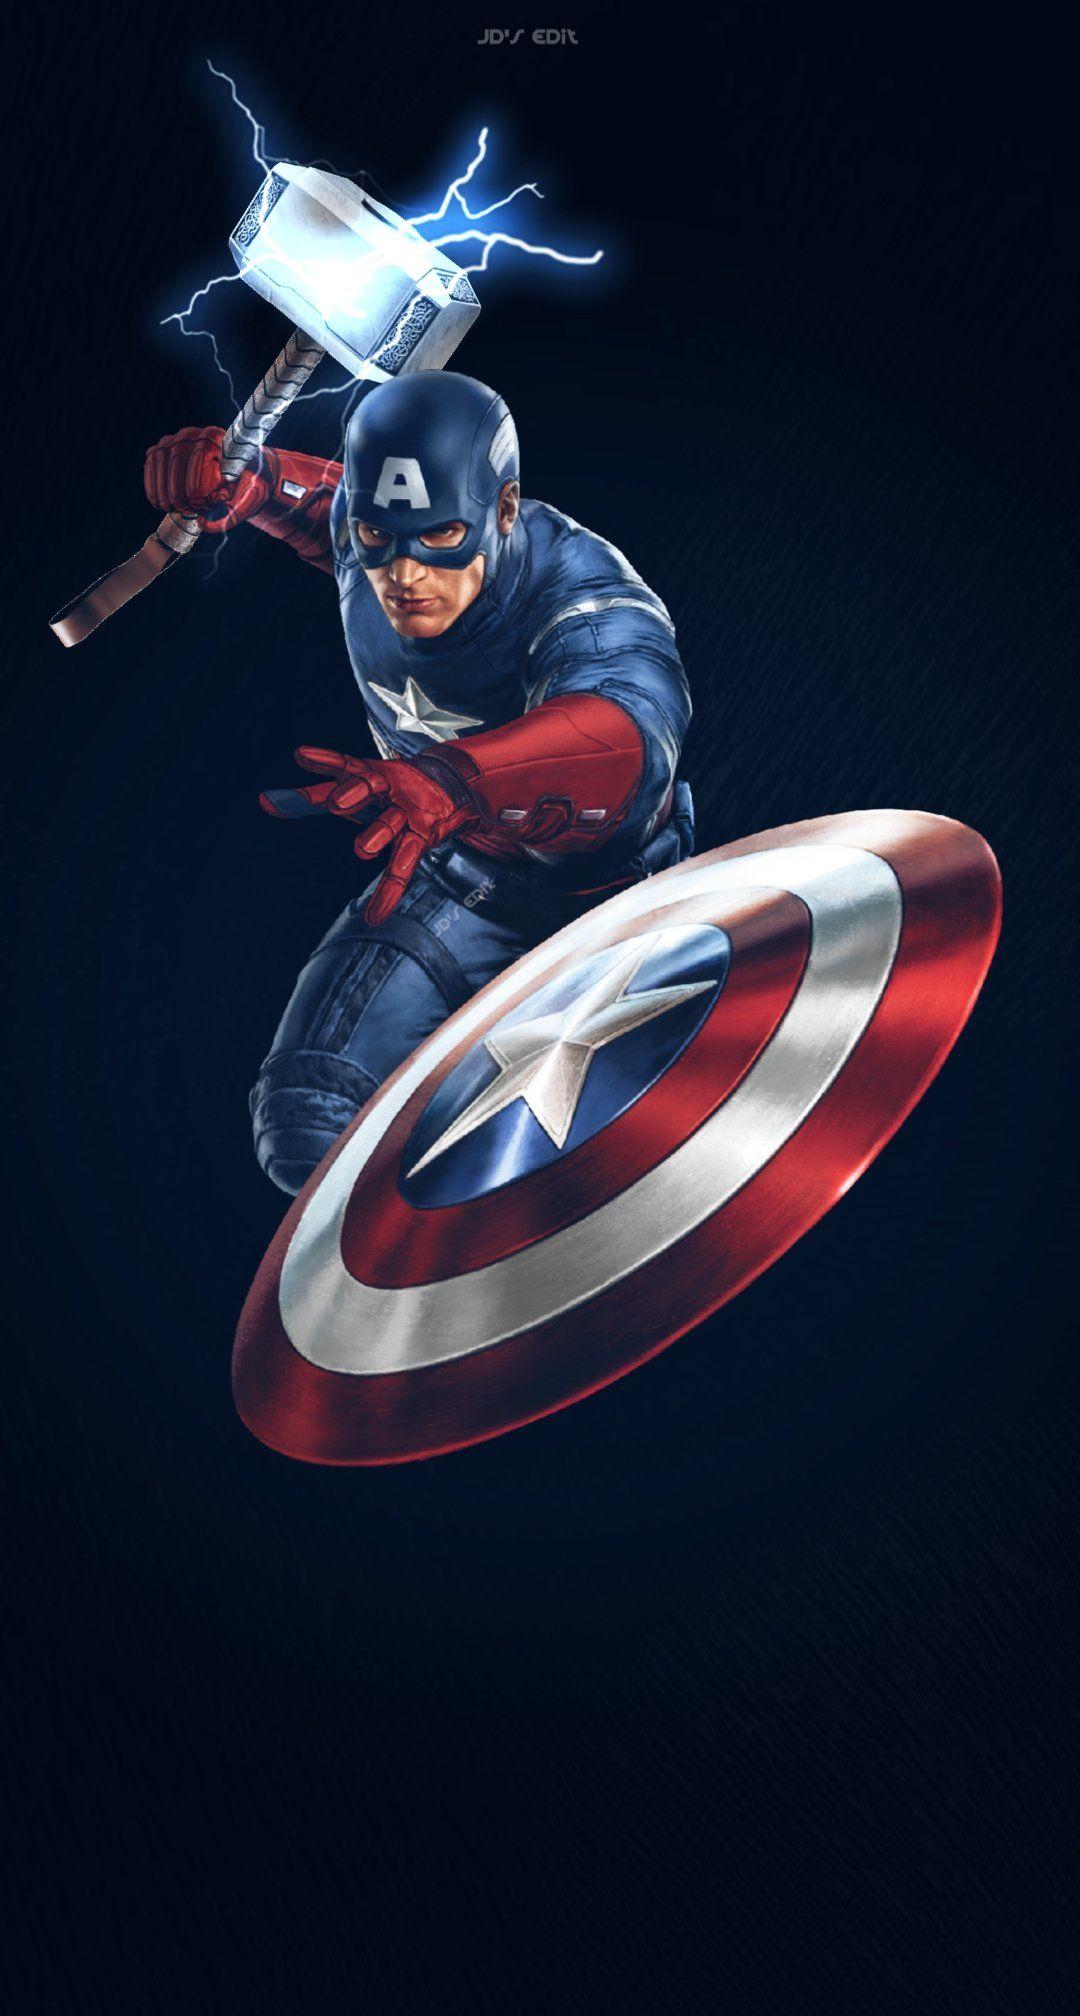 THE RONALDO TOUR on. Marvel avengers comics, Captain